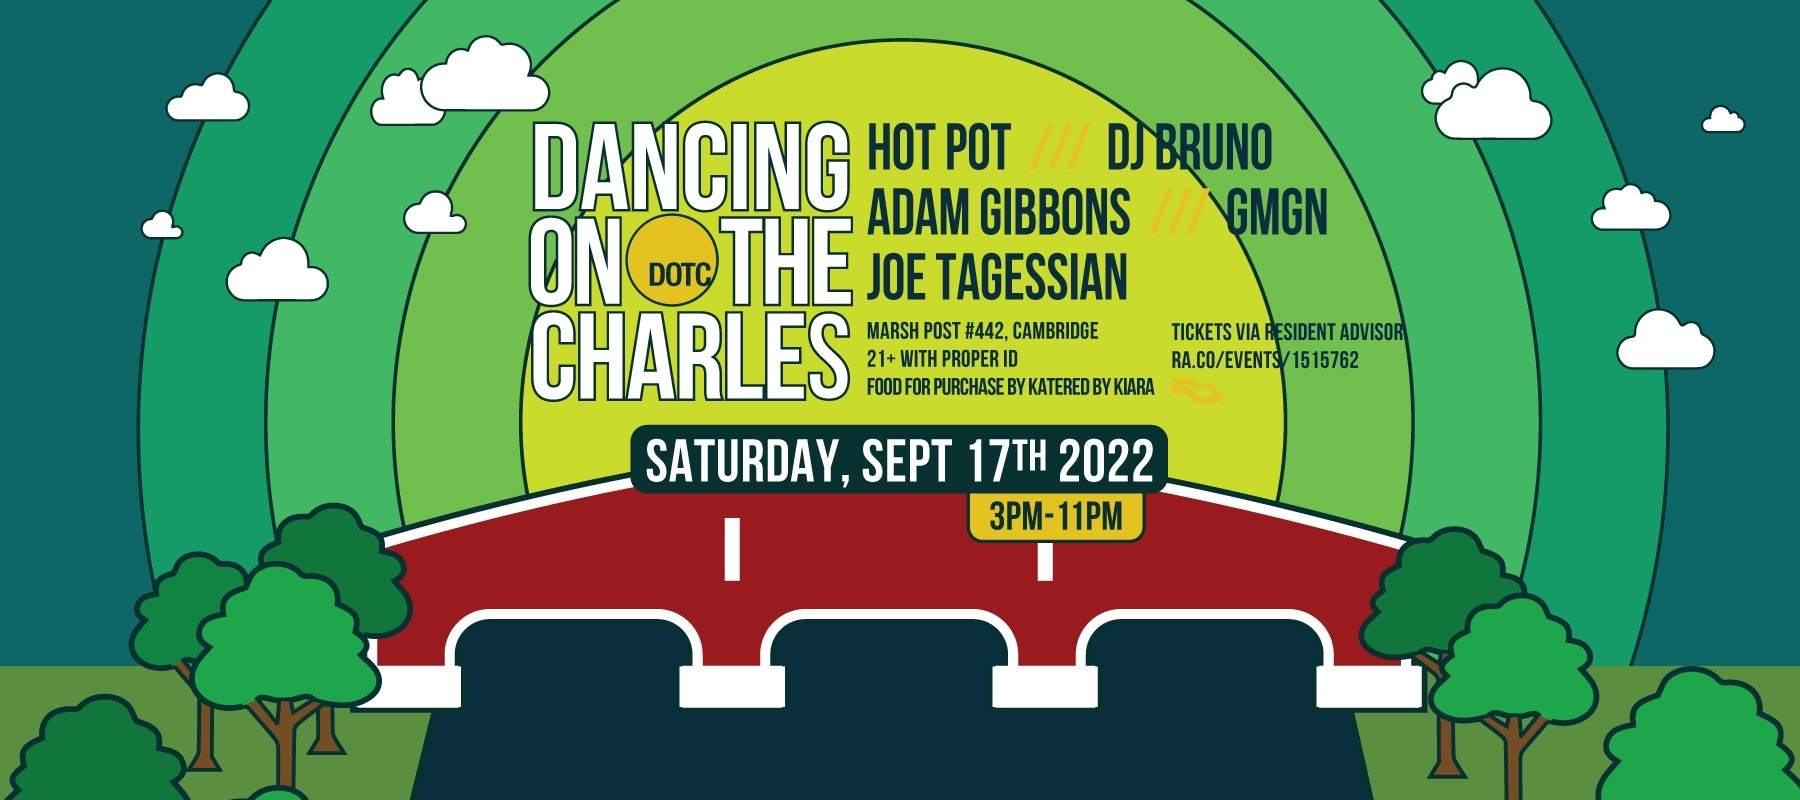 Dancing on the Charles - September Edition - Flyer back